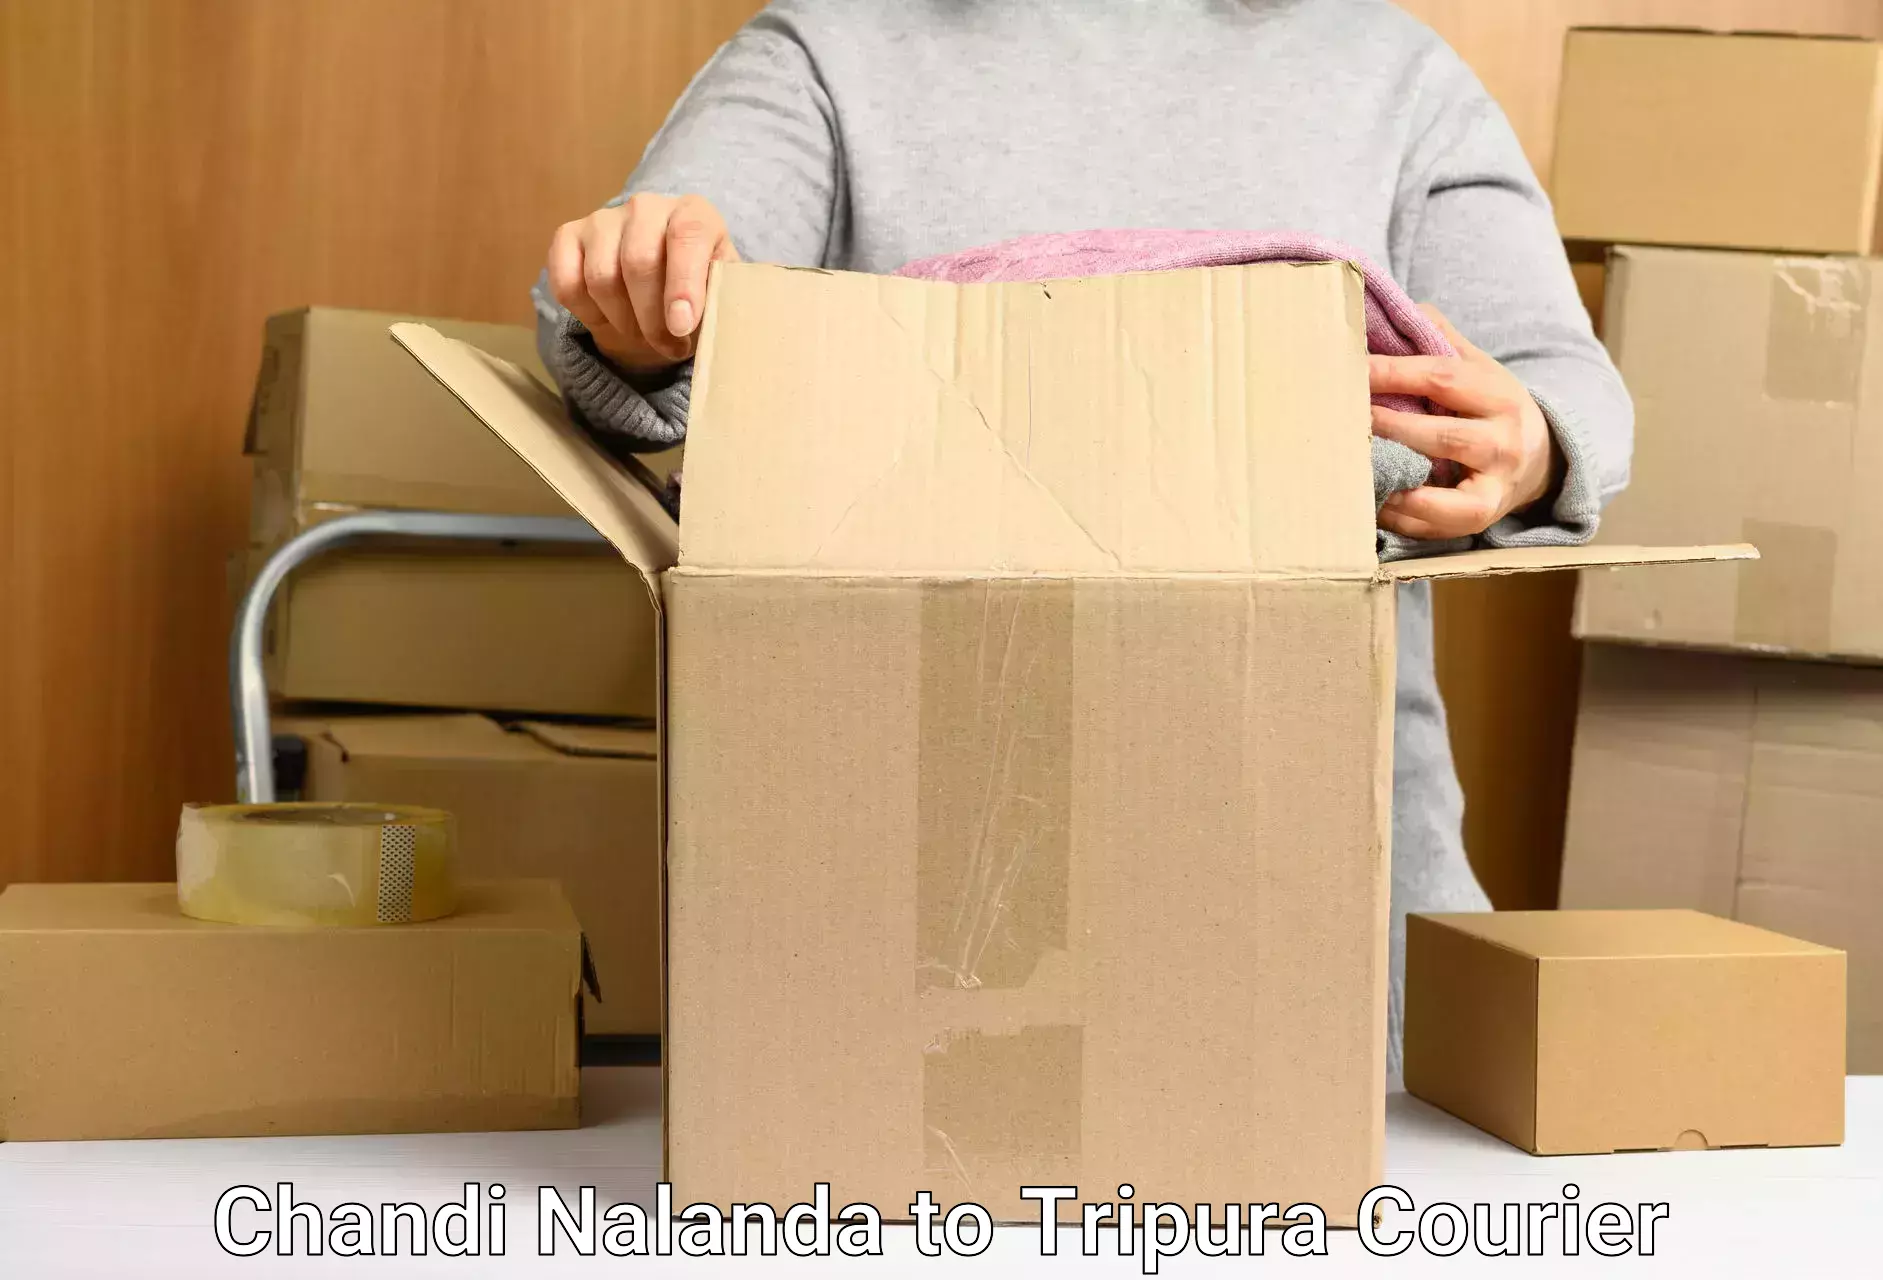 Next-day delivery options Chandi Nalanda to Tripura